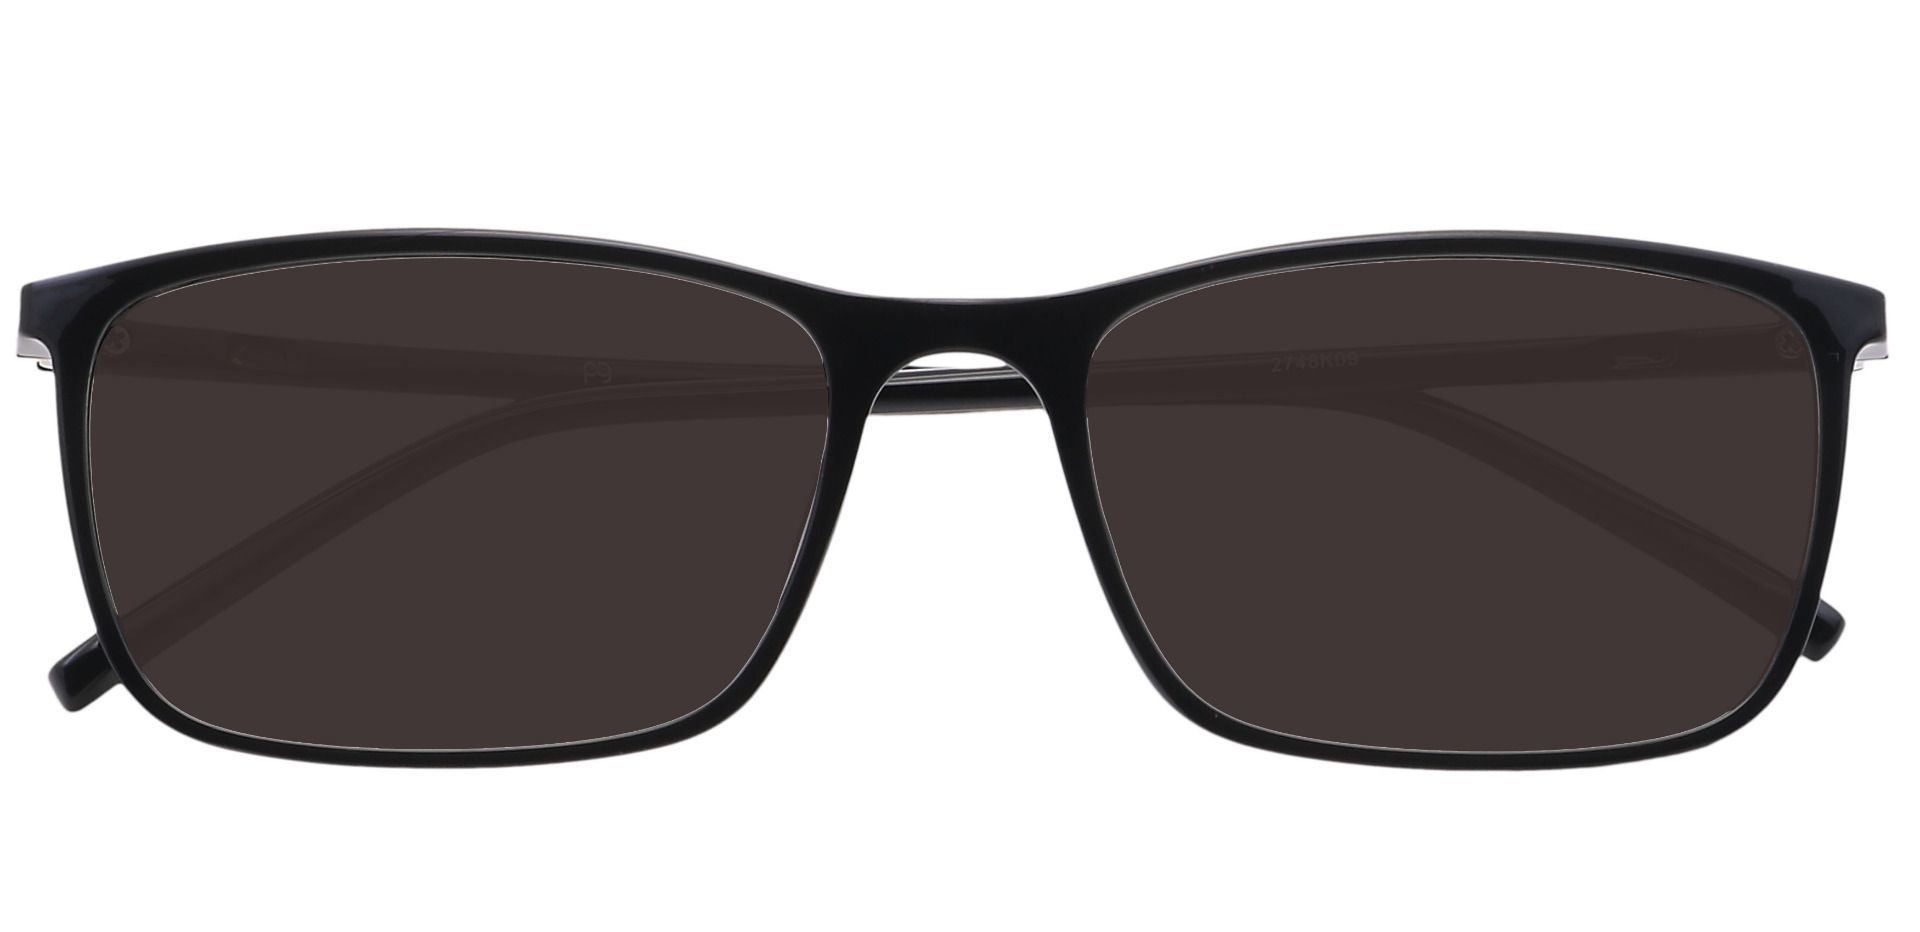 Fuji Rectangle Reading Sunglasses - Black Frame With Gray Lenses